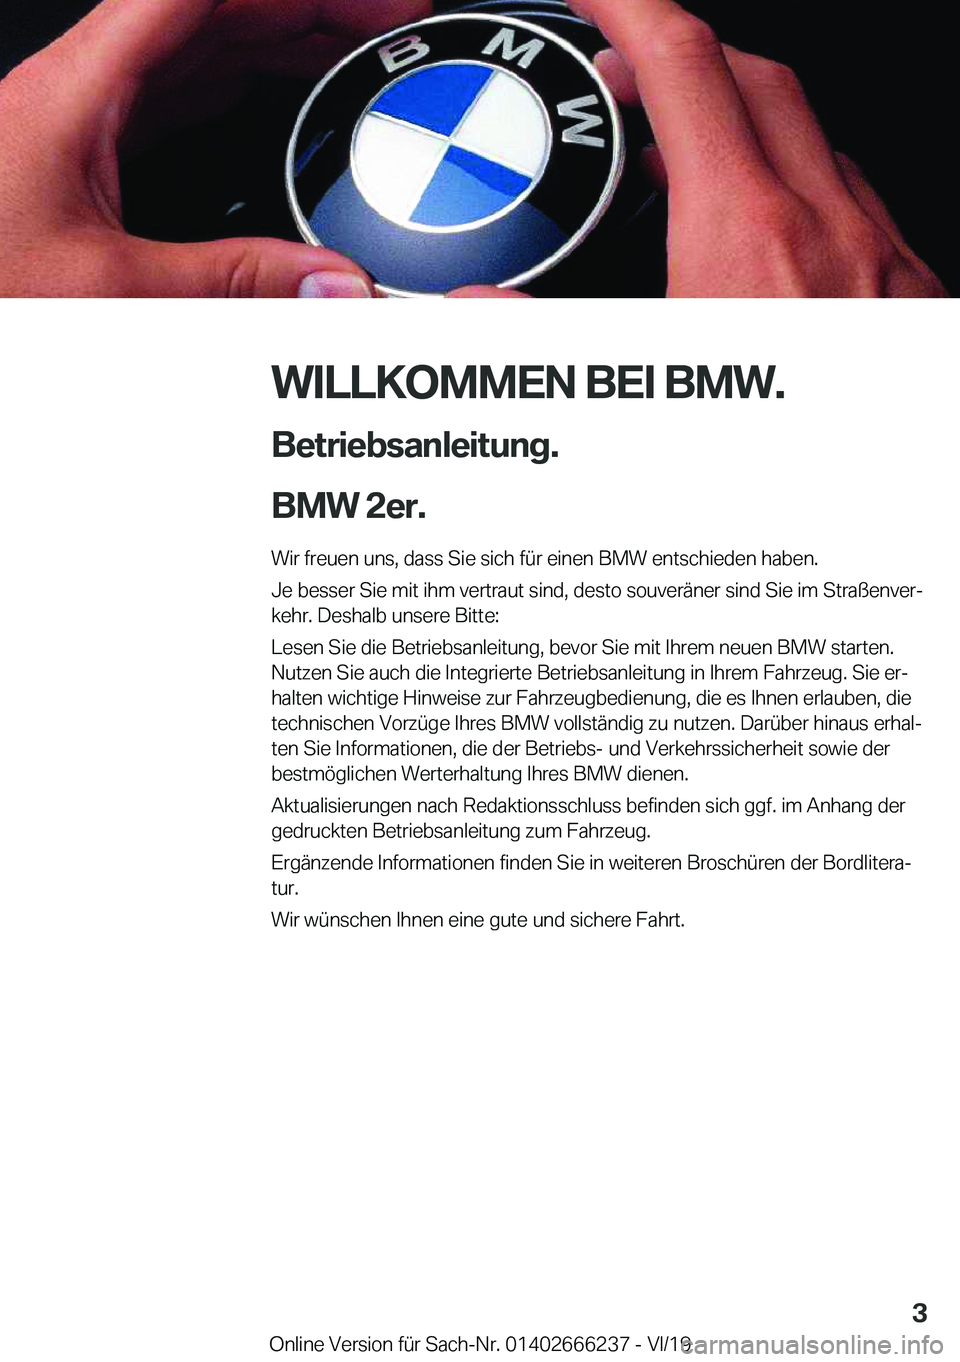 BMW 2 SERIES COUPE 2020  Betriebsanleitungen (in German) �W�I�L�L�K�O�M�M�E�N��B�E�I��B�M�W�.�B�e�t�r�i�e�b�s�a�n�l�e�i�t�u�n�g�.
�B�M�W��2�e�r�.�
�W�i�r��f�r�e�u�e�n��u�n�s�,��d�a�s�s��S�i�e��s�i�c�h��f�